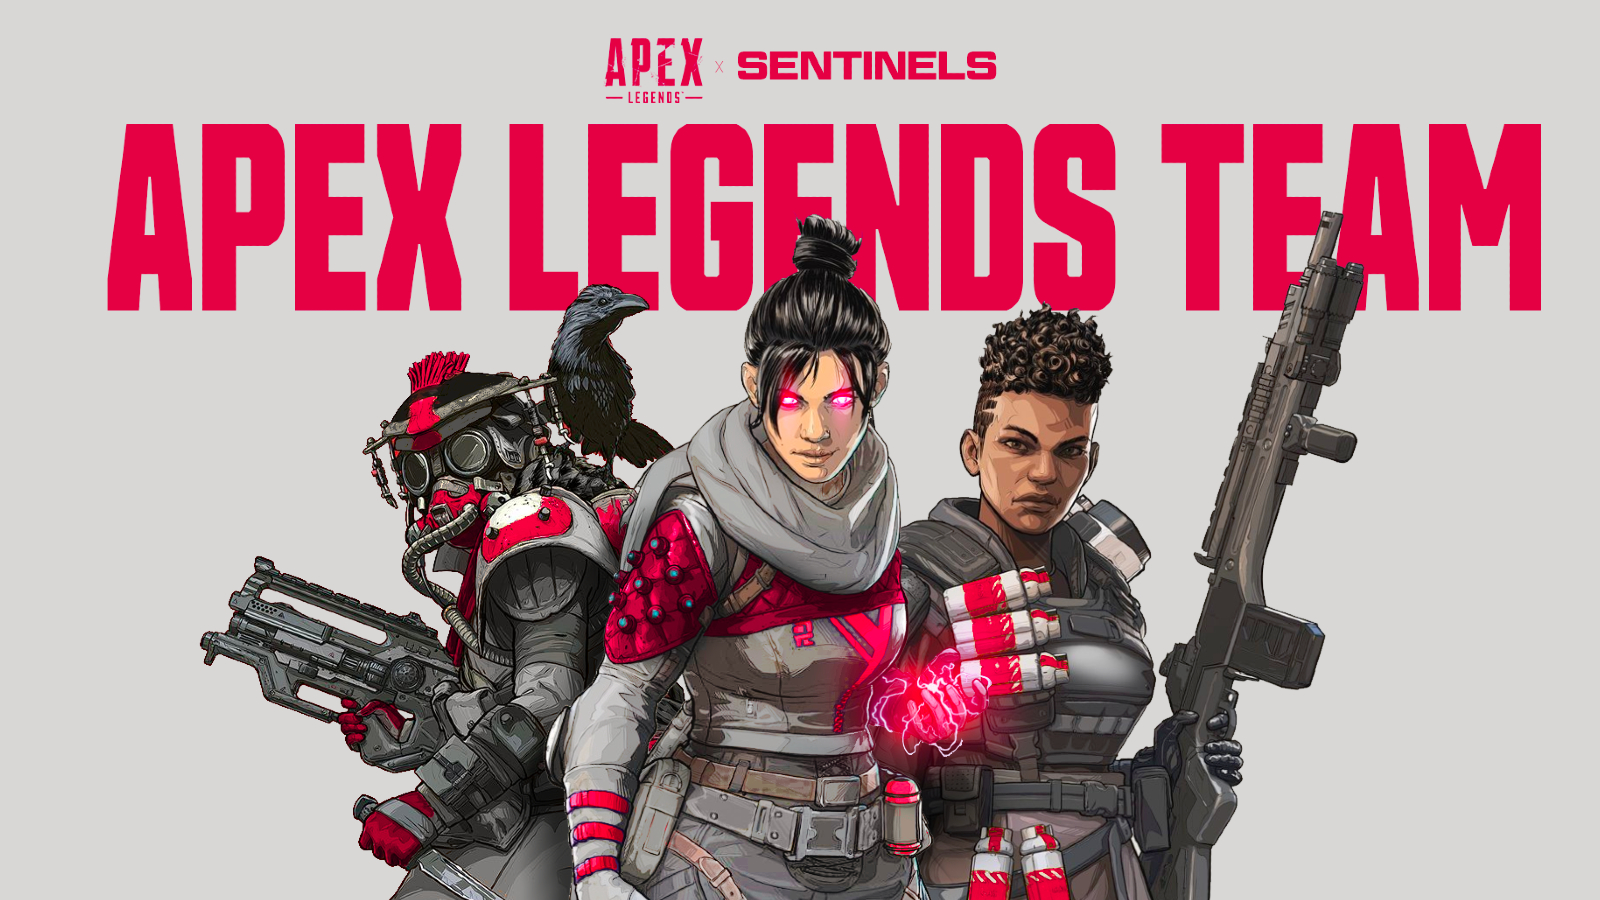 New Sentinels Apex Legends player revealed on ALSG Battlefly rosters – Egaxo